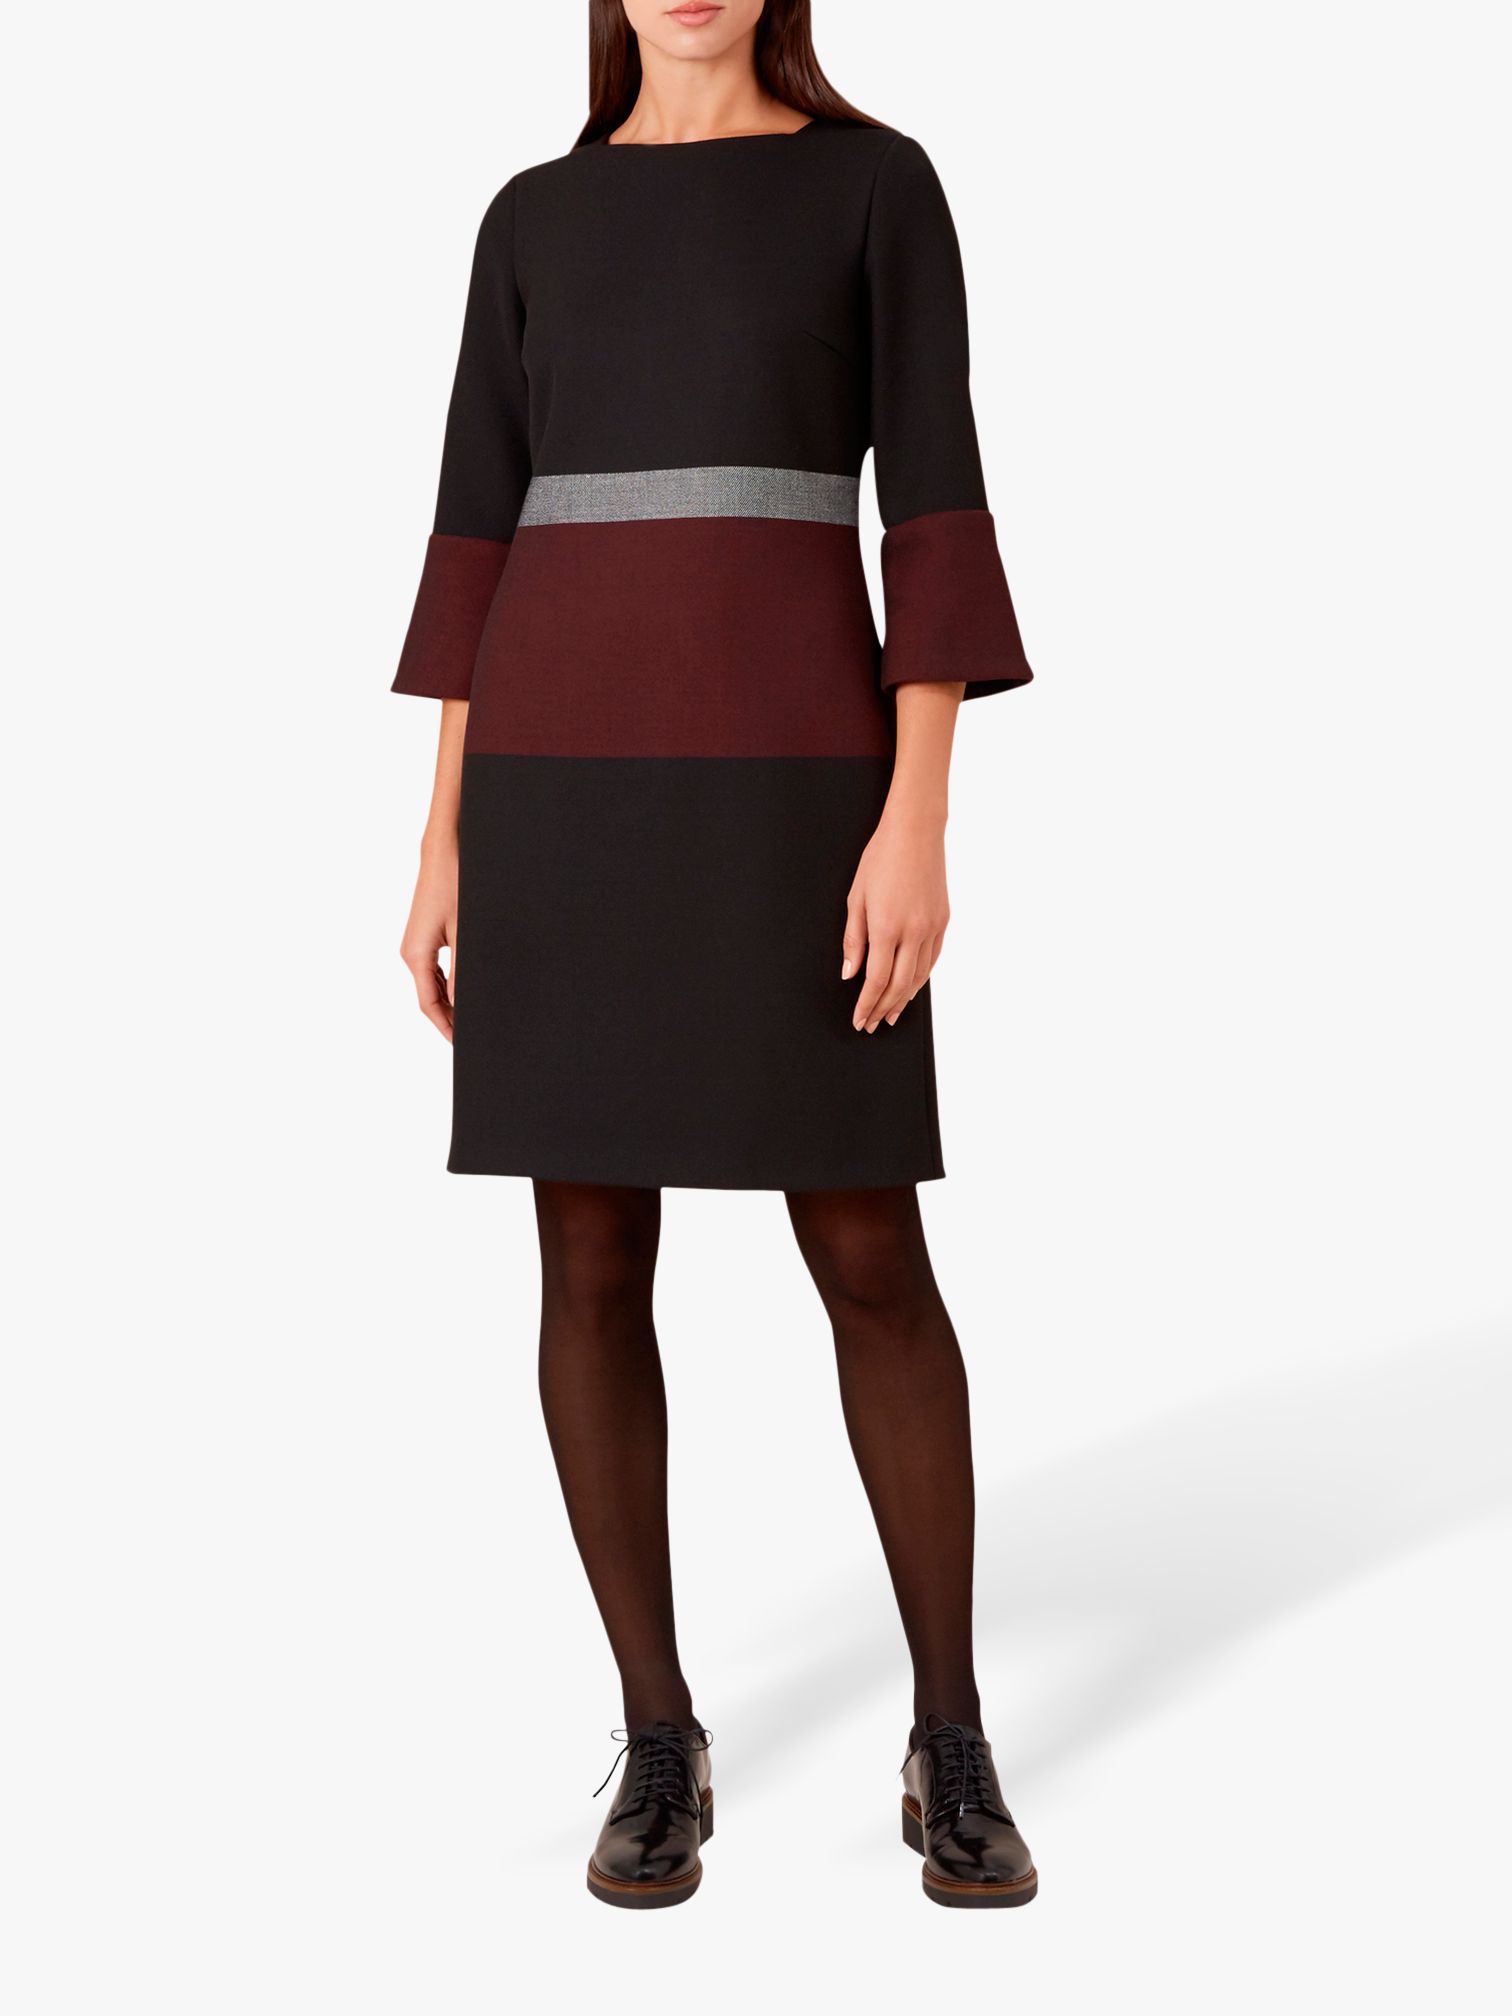 black crochet dress long sleeve